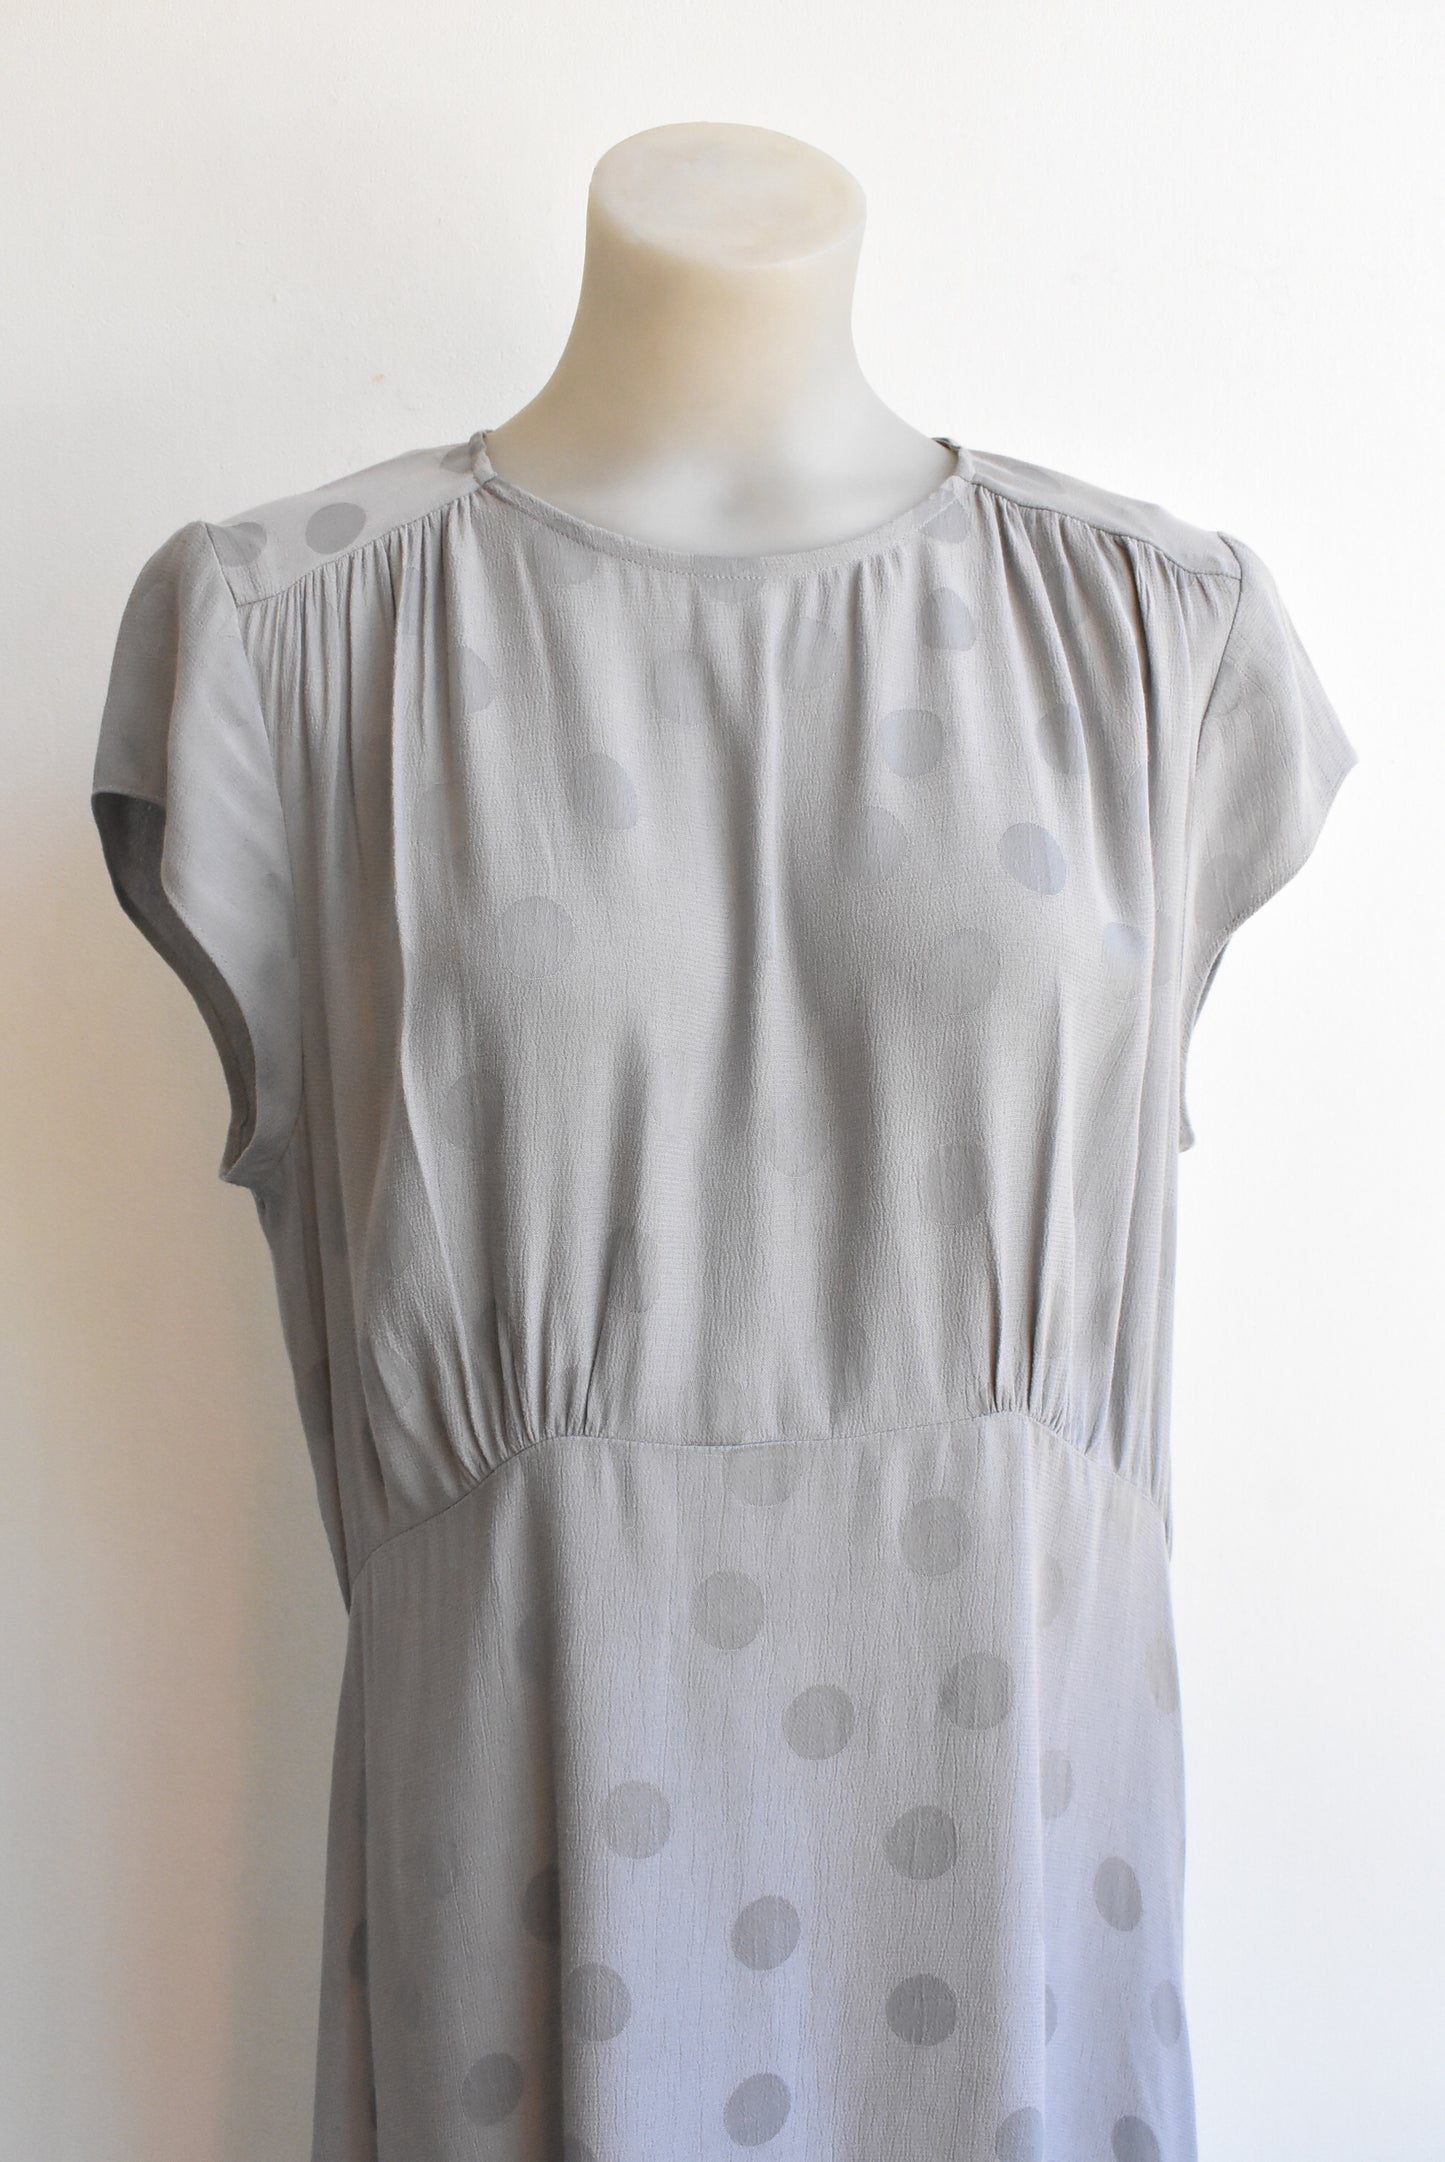 NEW Next silvery grey polka dot dress, size 12